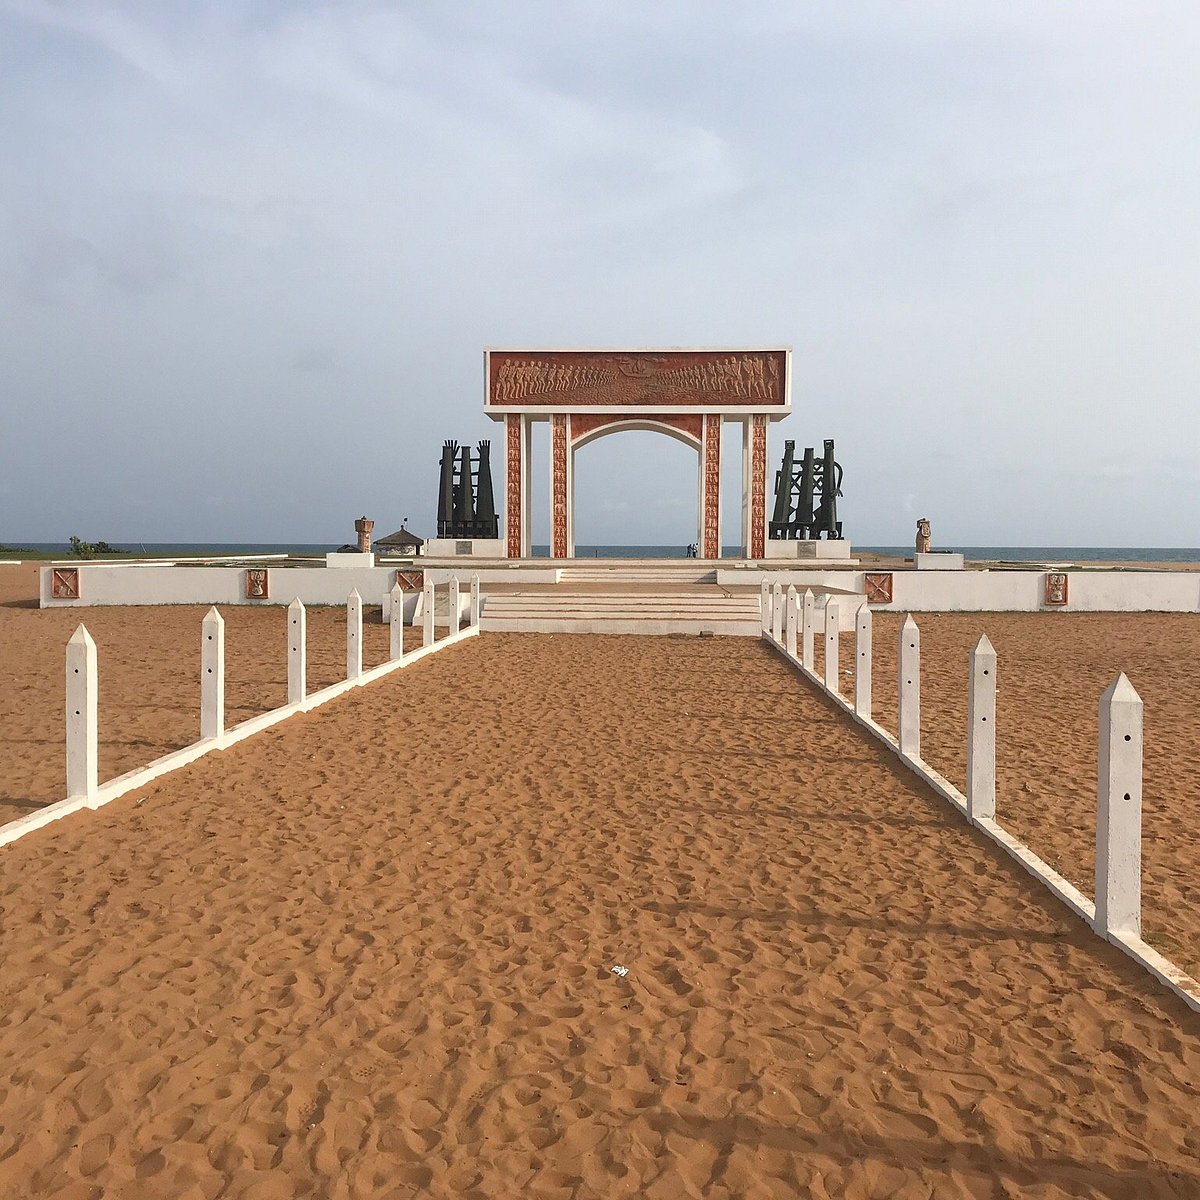 La Porte du Non-Retour (The Door of No Return) – Ouidah, Benin - Atlas  Obscura